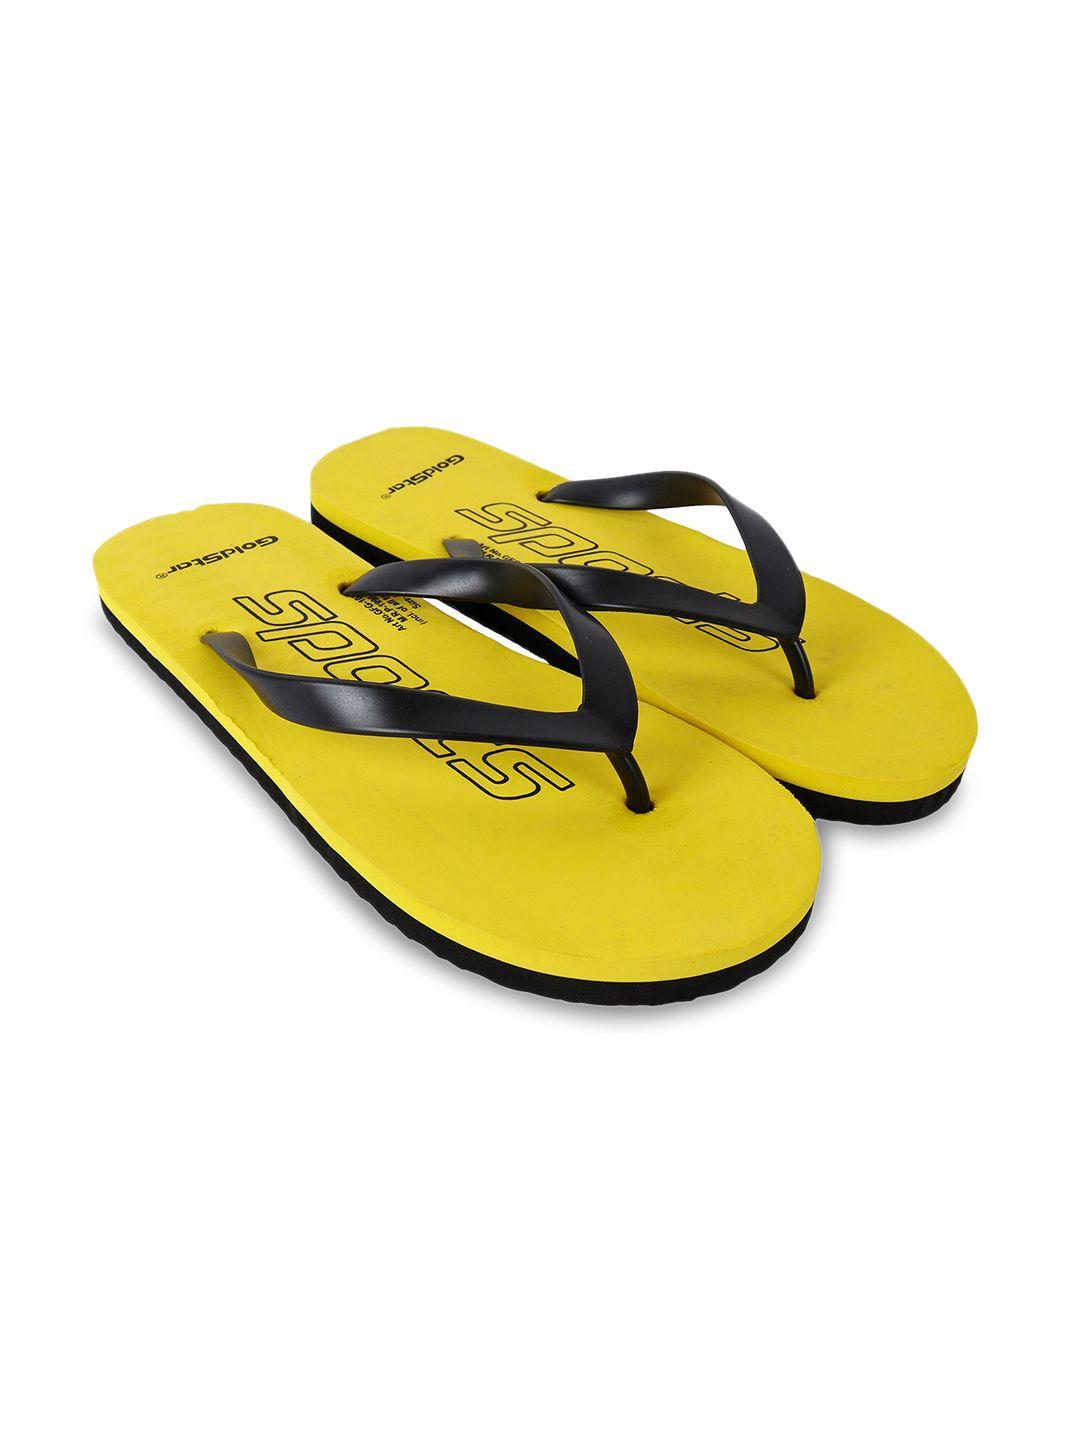 goldstar men yellow & black printed rubber thong flip-flops